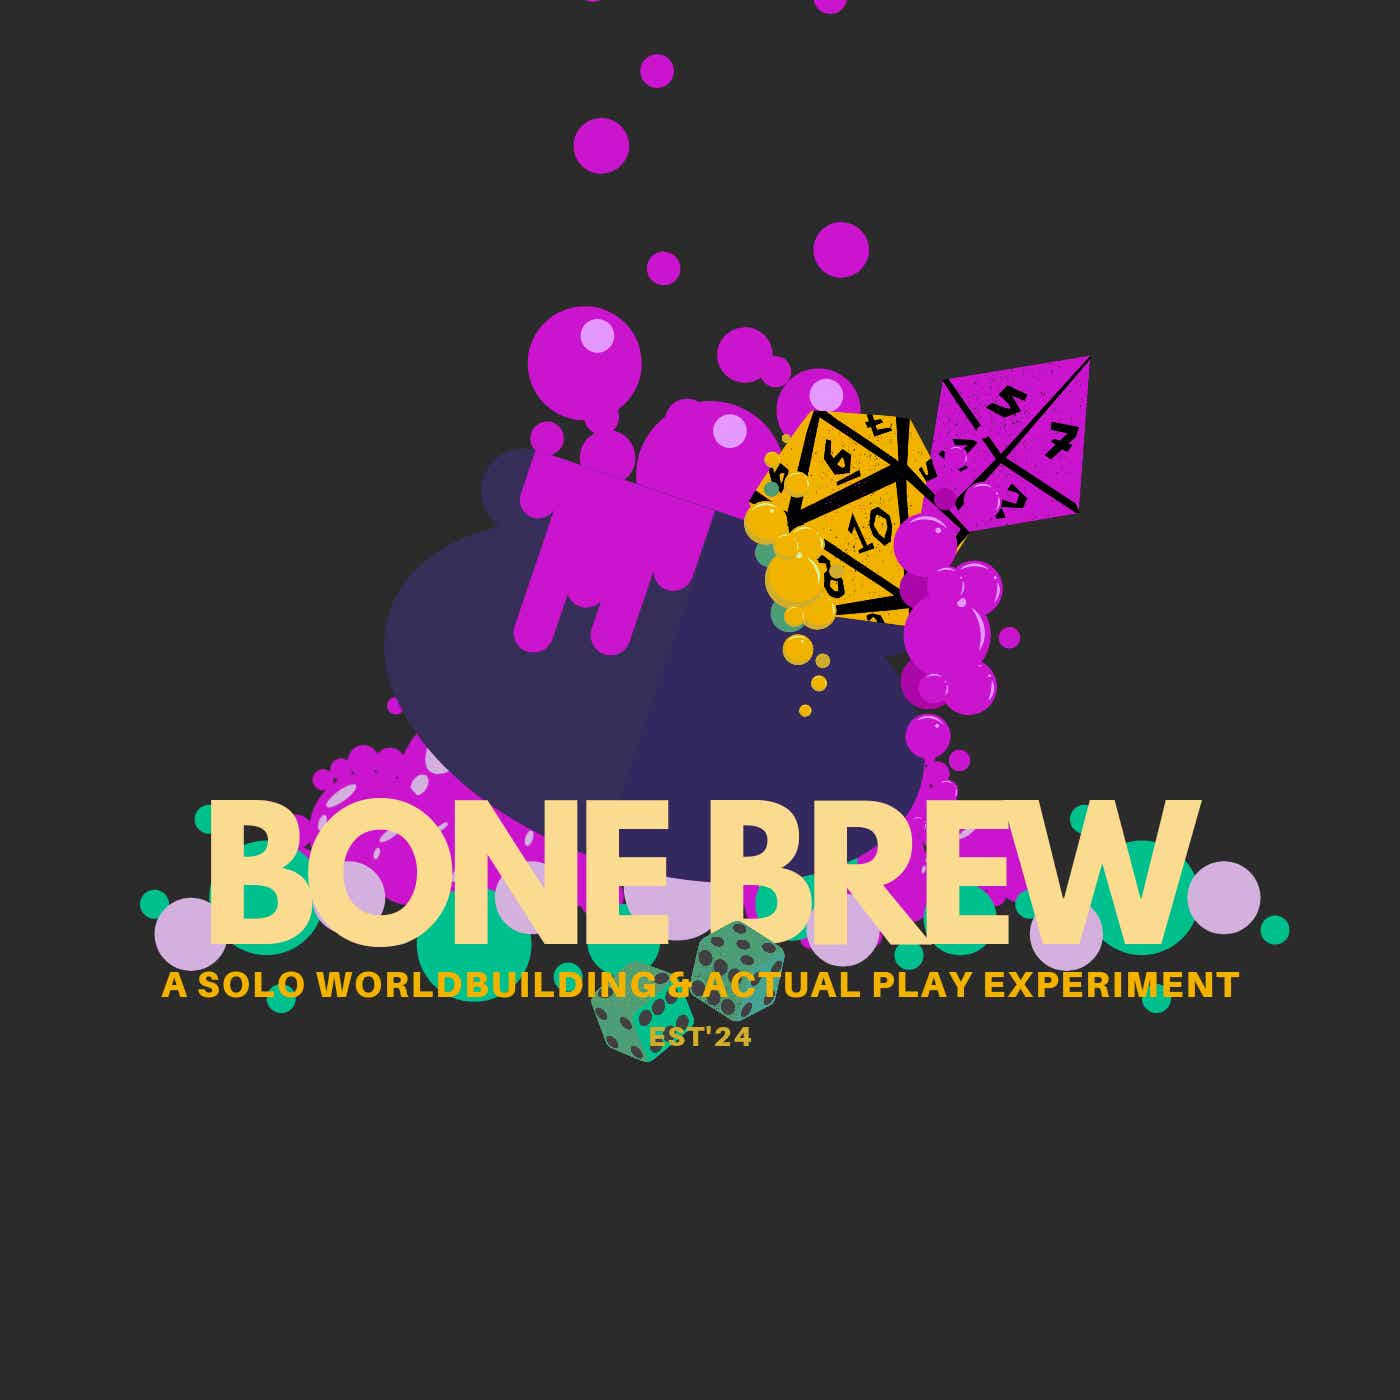 The Bone Brew